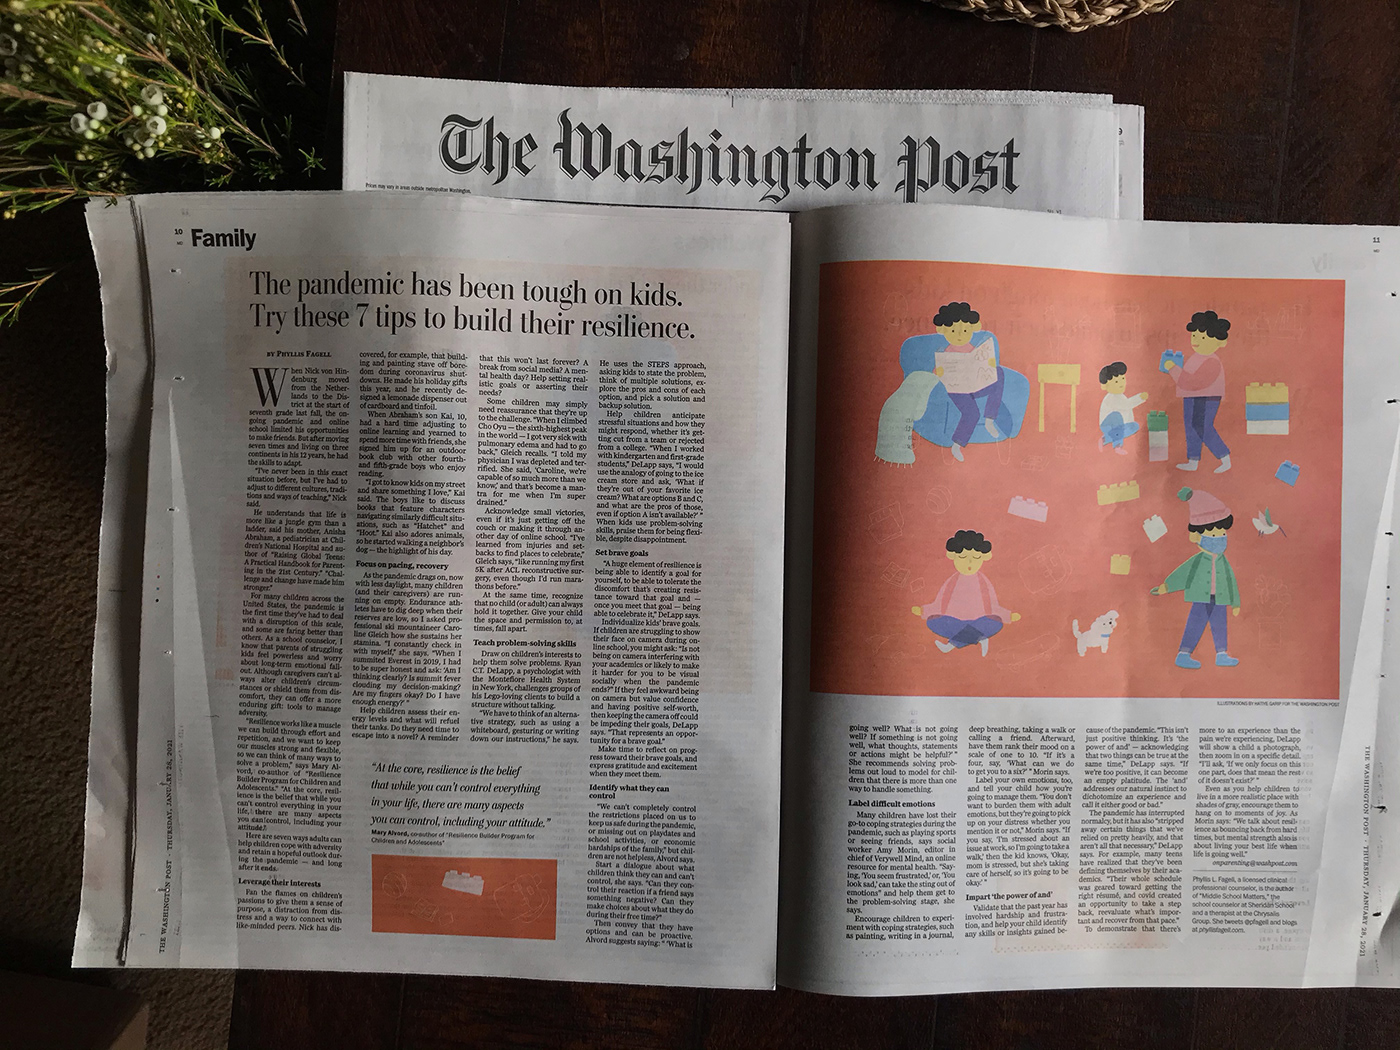 children cover cover illustration Editorial Illustration newspaper pandemic editorial ILLUSTRATION  Washington Post